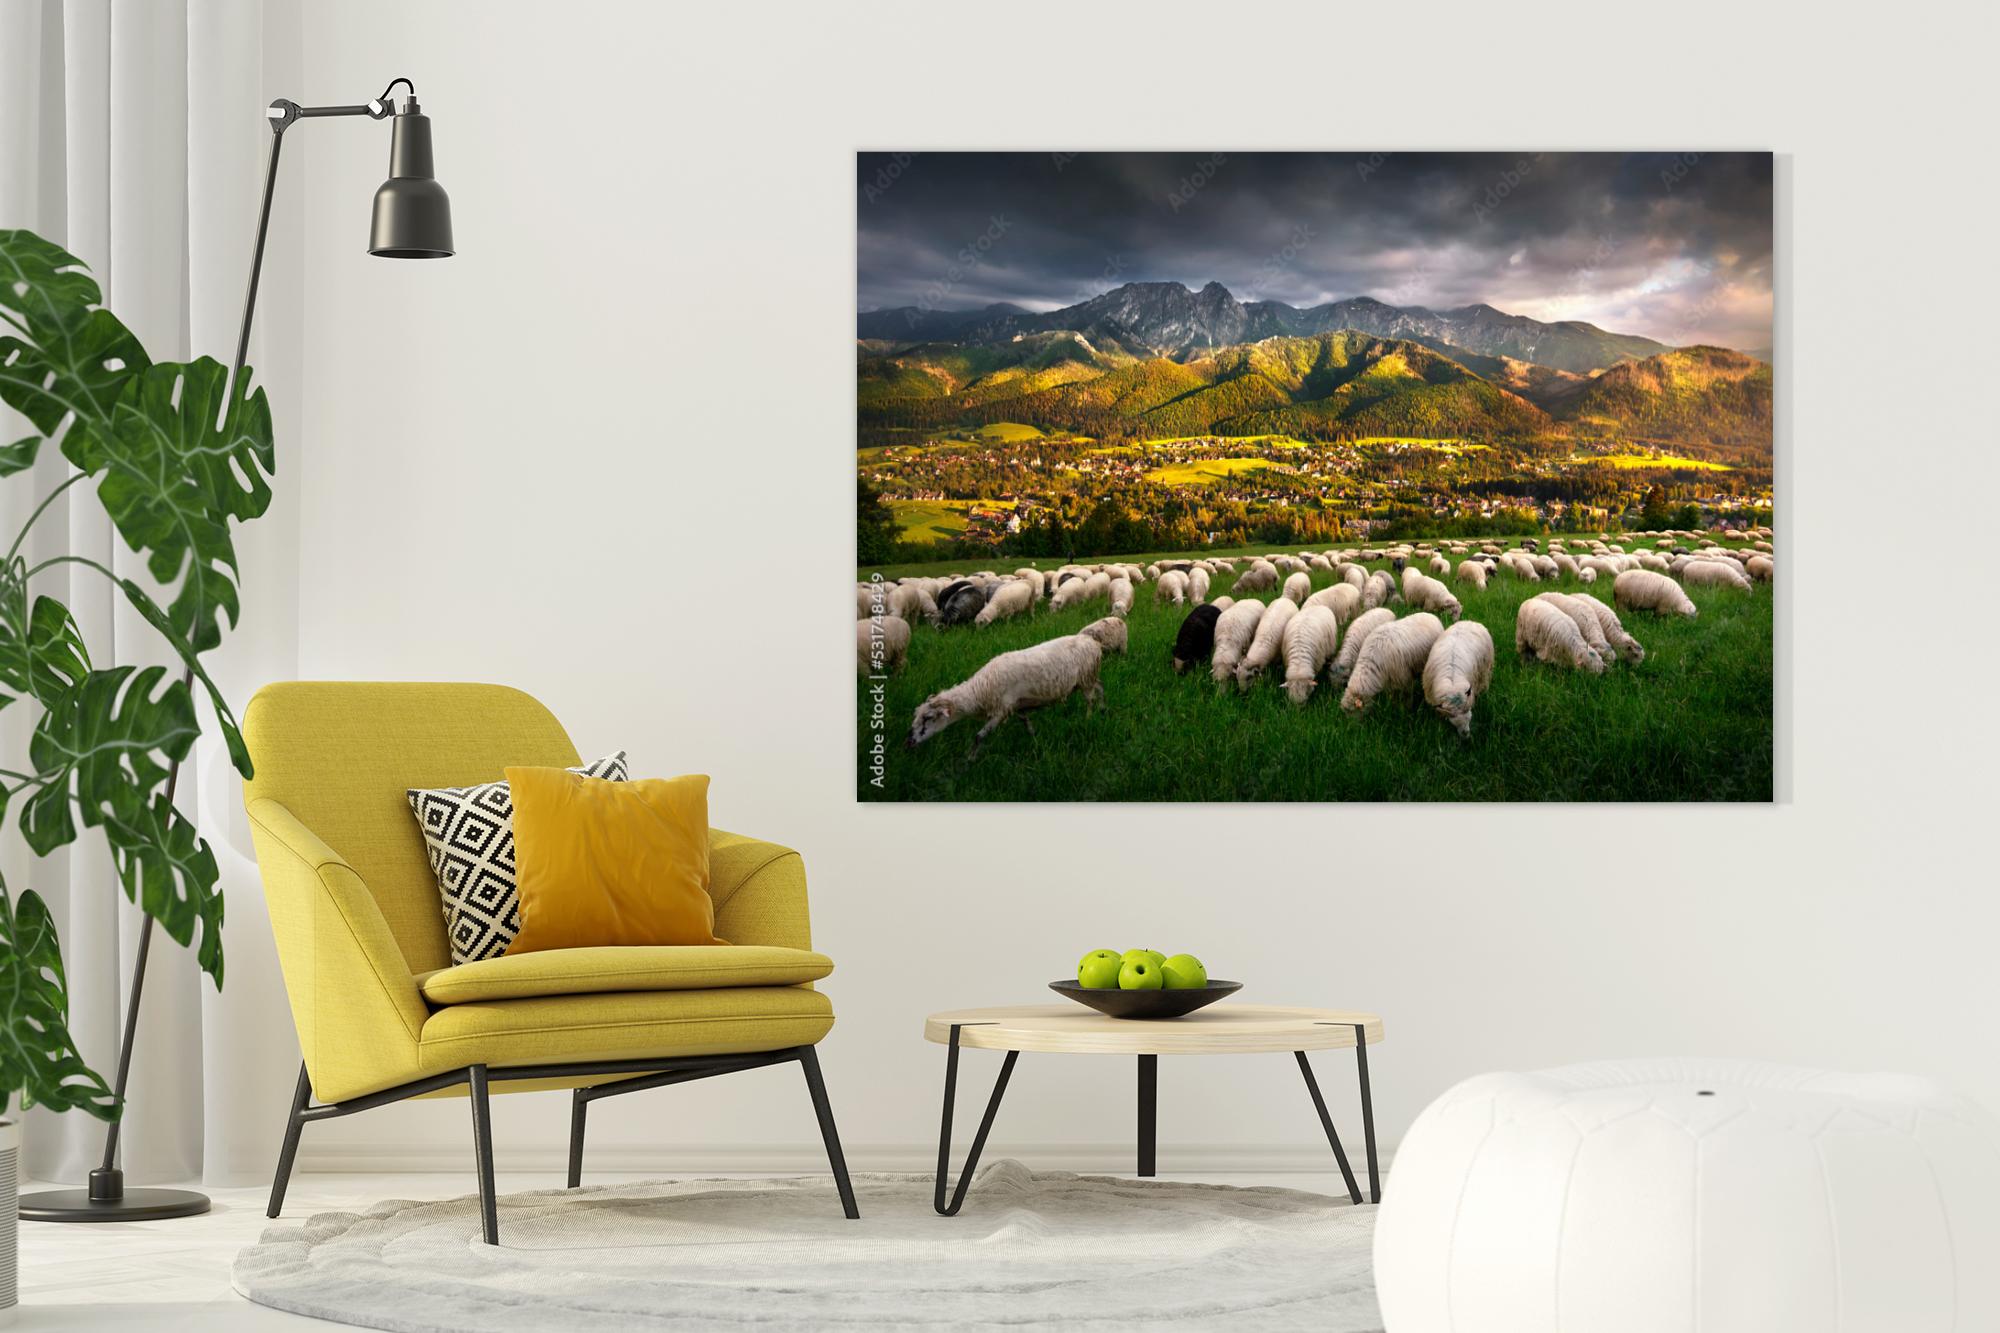 Owce pasące się na pastwisku